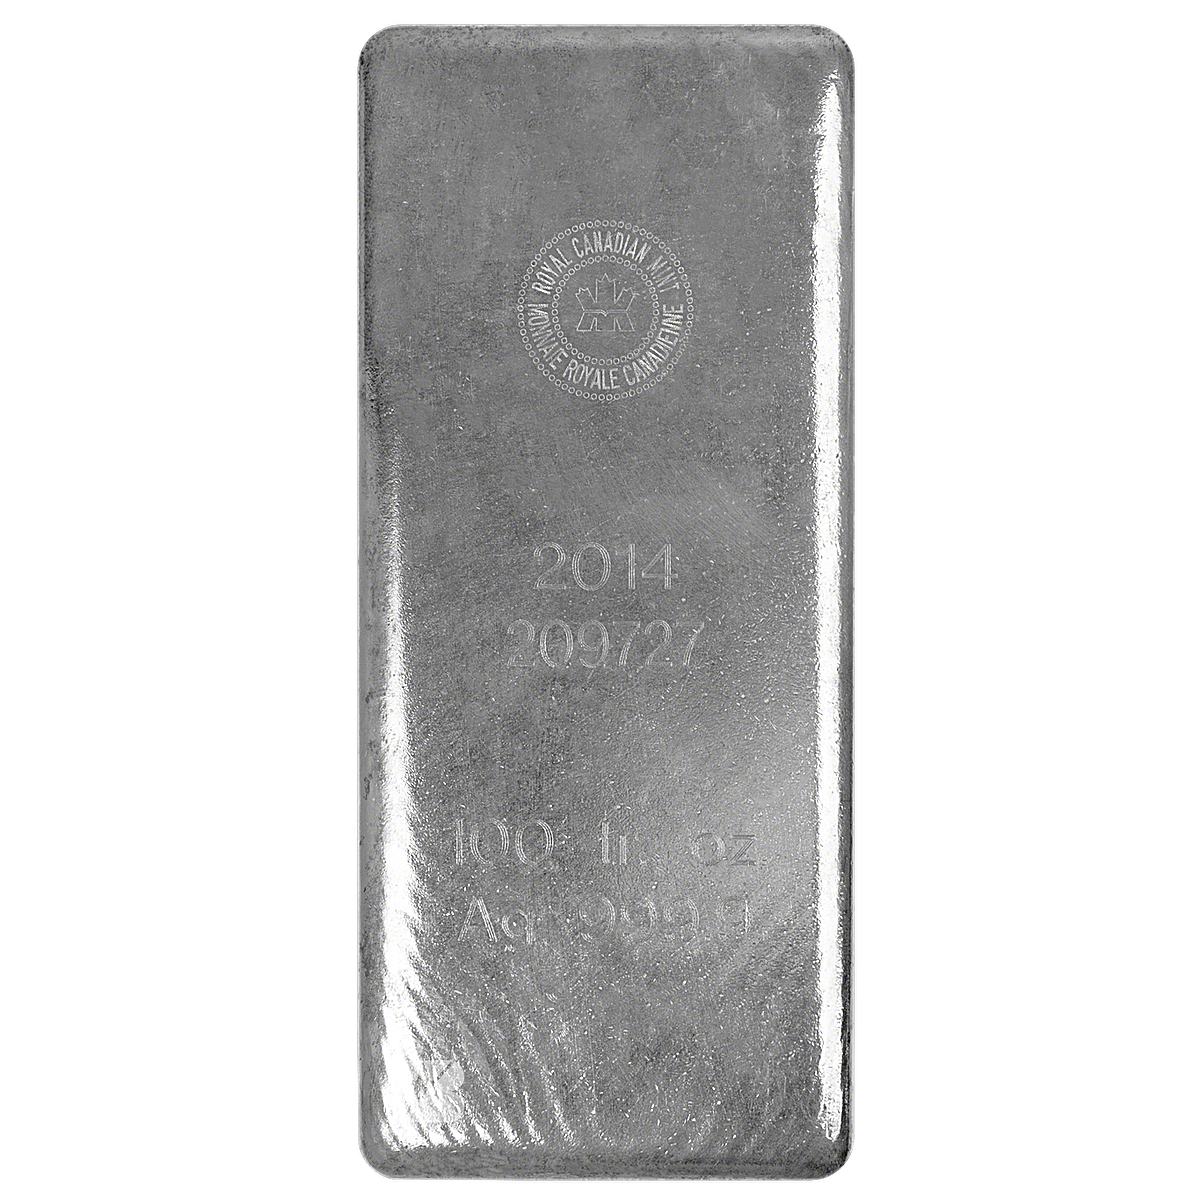 100 oz Royal Canadian Mint Silver Bar | BullionStar Singapore